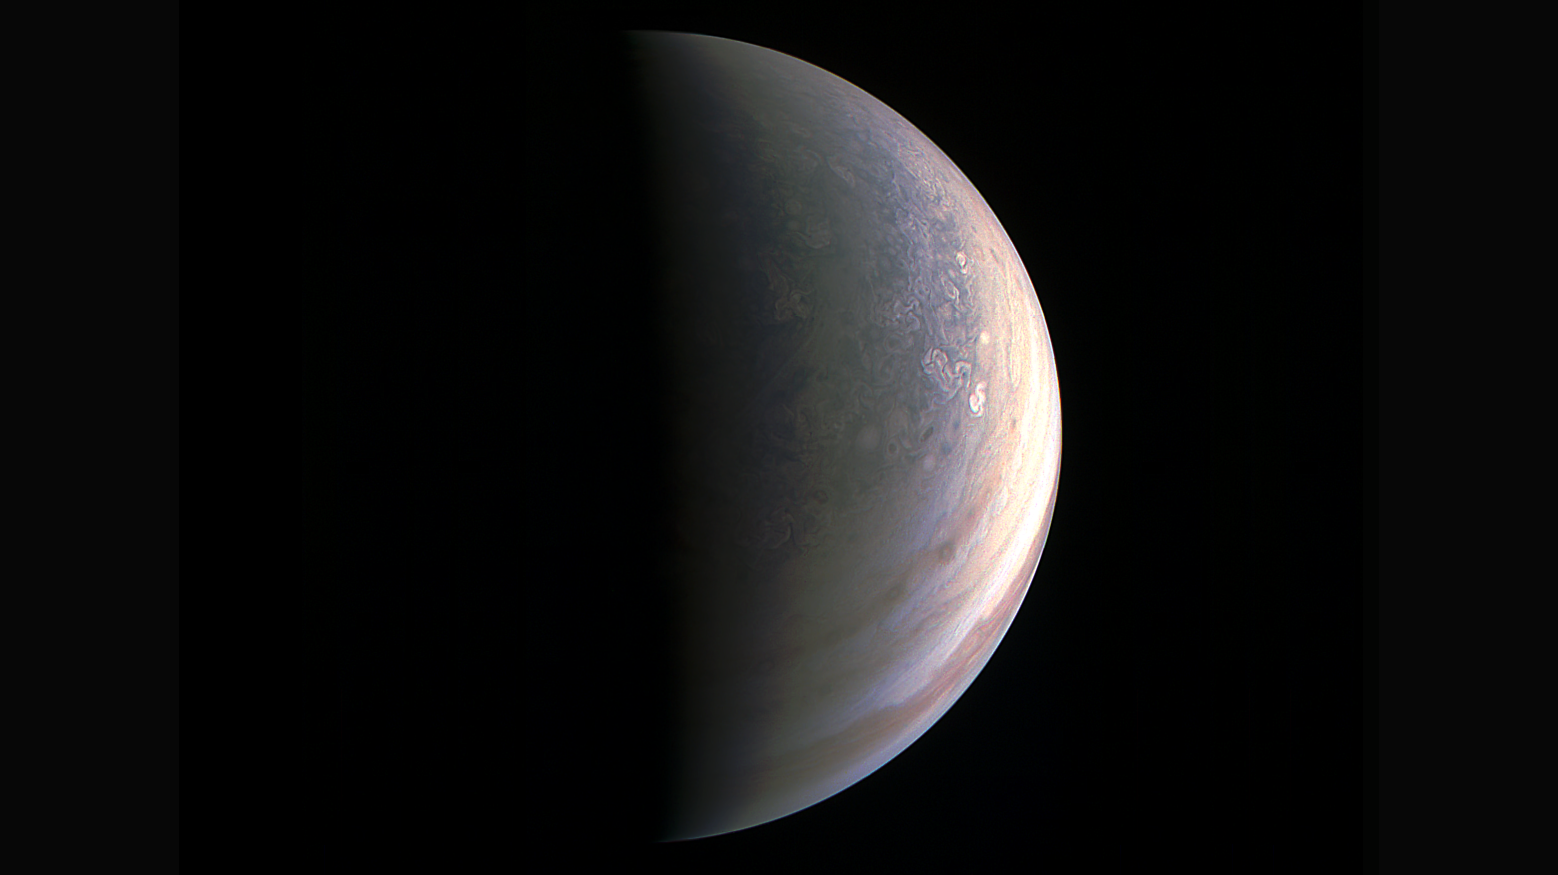 NASA's Juno spacecraft sent back this image of Jupiter's north pole taken on August 27, 2016. 